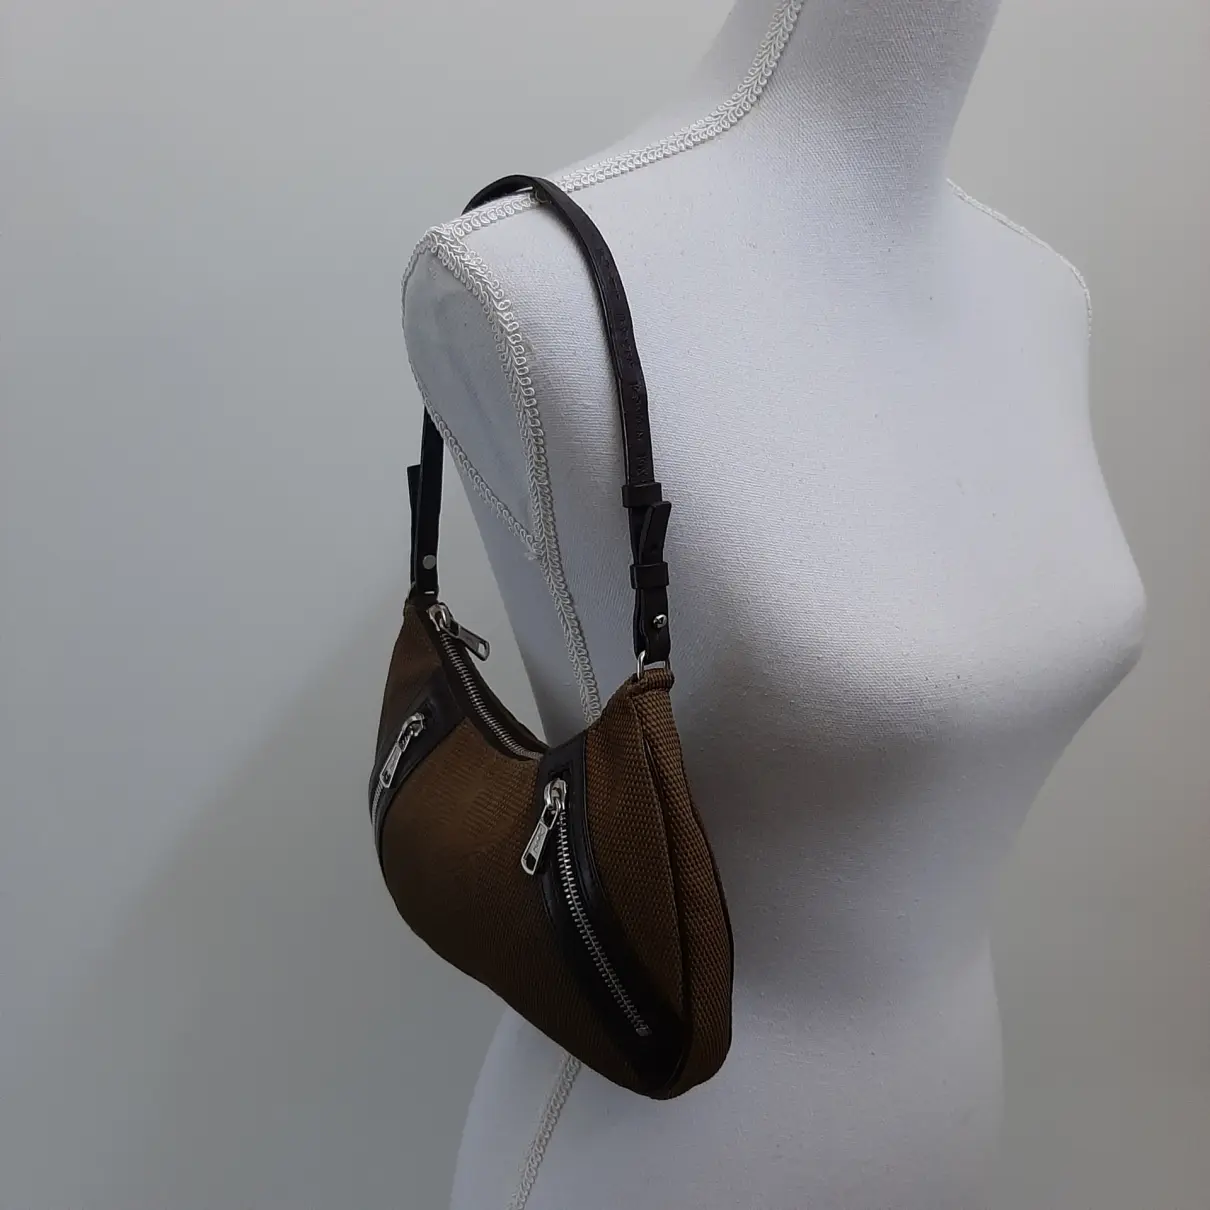 Buy Yves Saint Laurent Cloth handbag online